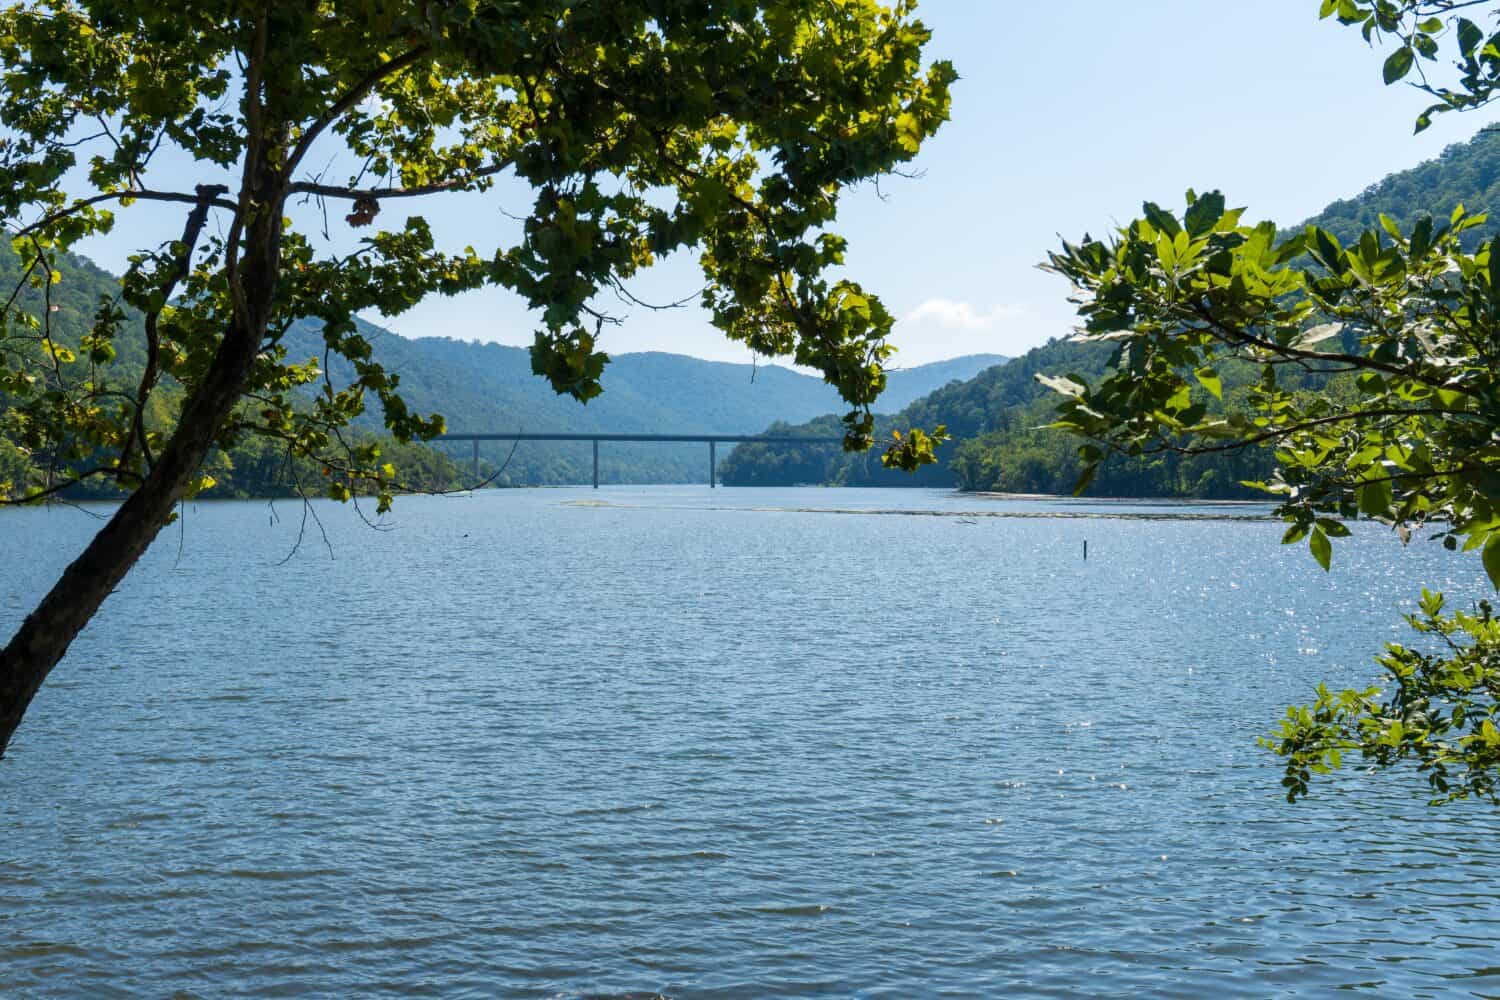 Bluestone National Scenic River and Bluestone State Park in West Virginia. Bluestone River flows into New River.